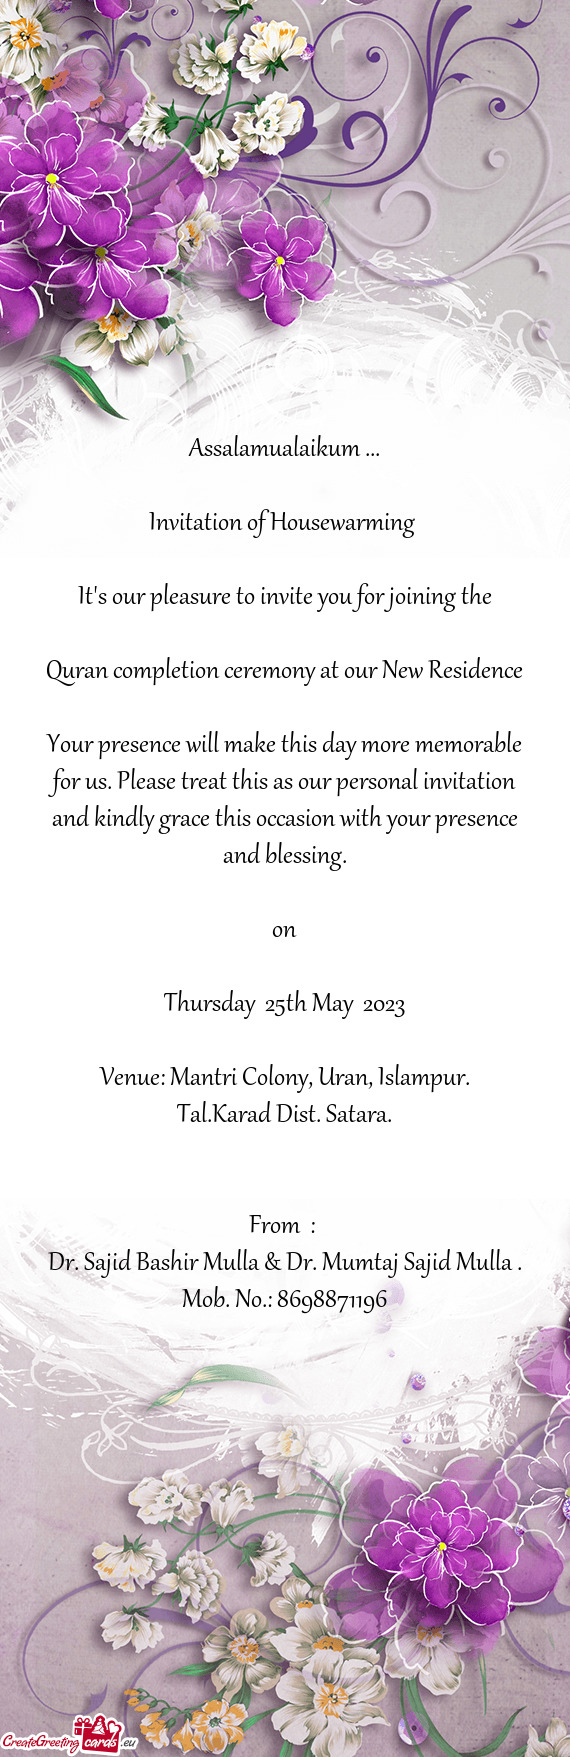 Invitation of Housewarming